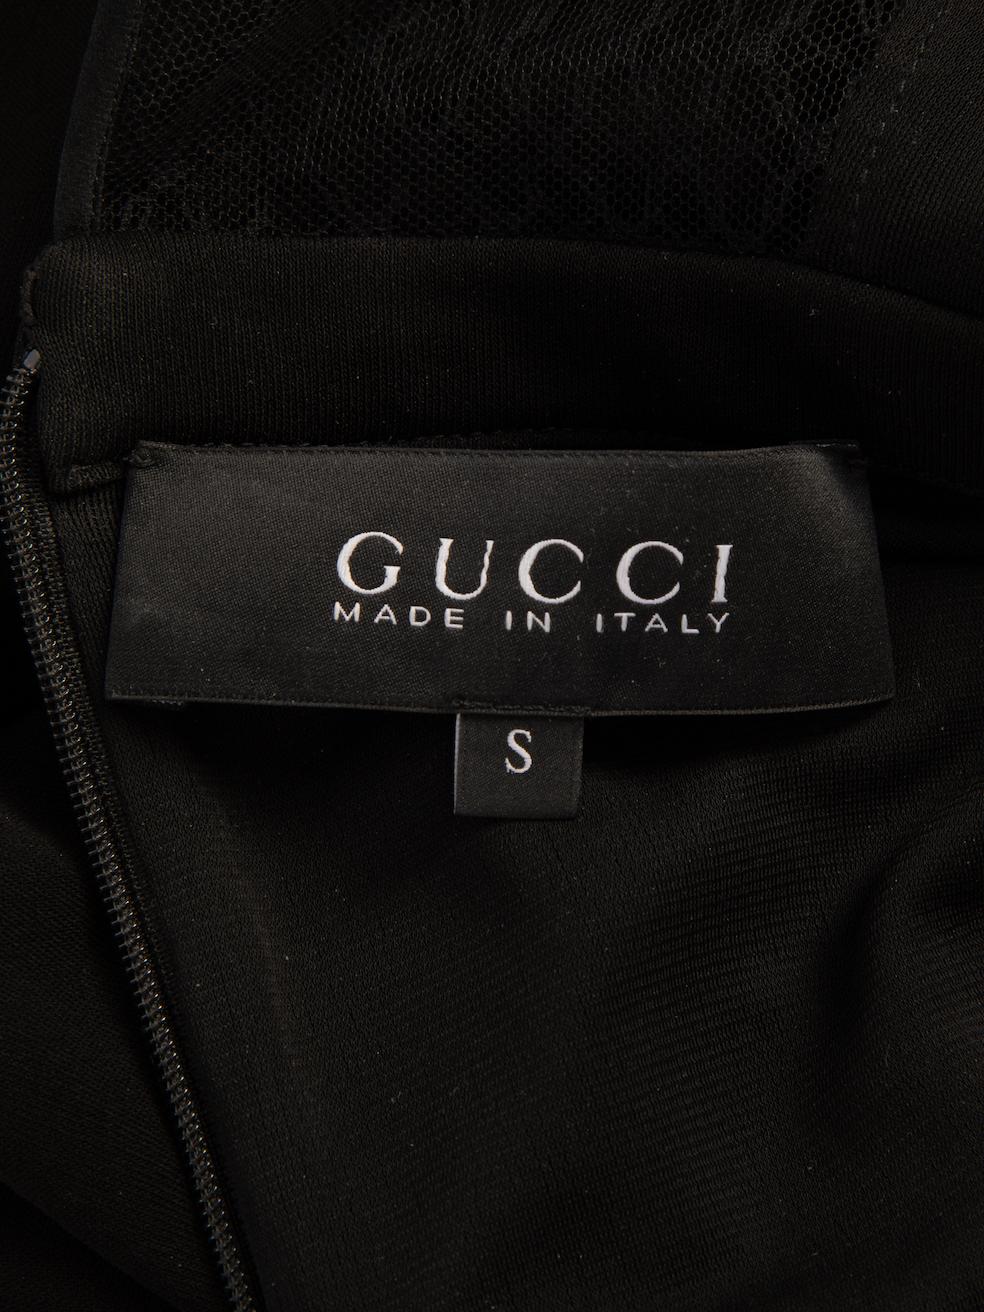 Gucci Women's Black Mesh Panel Long Sleeve Dress For Sale 3